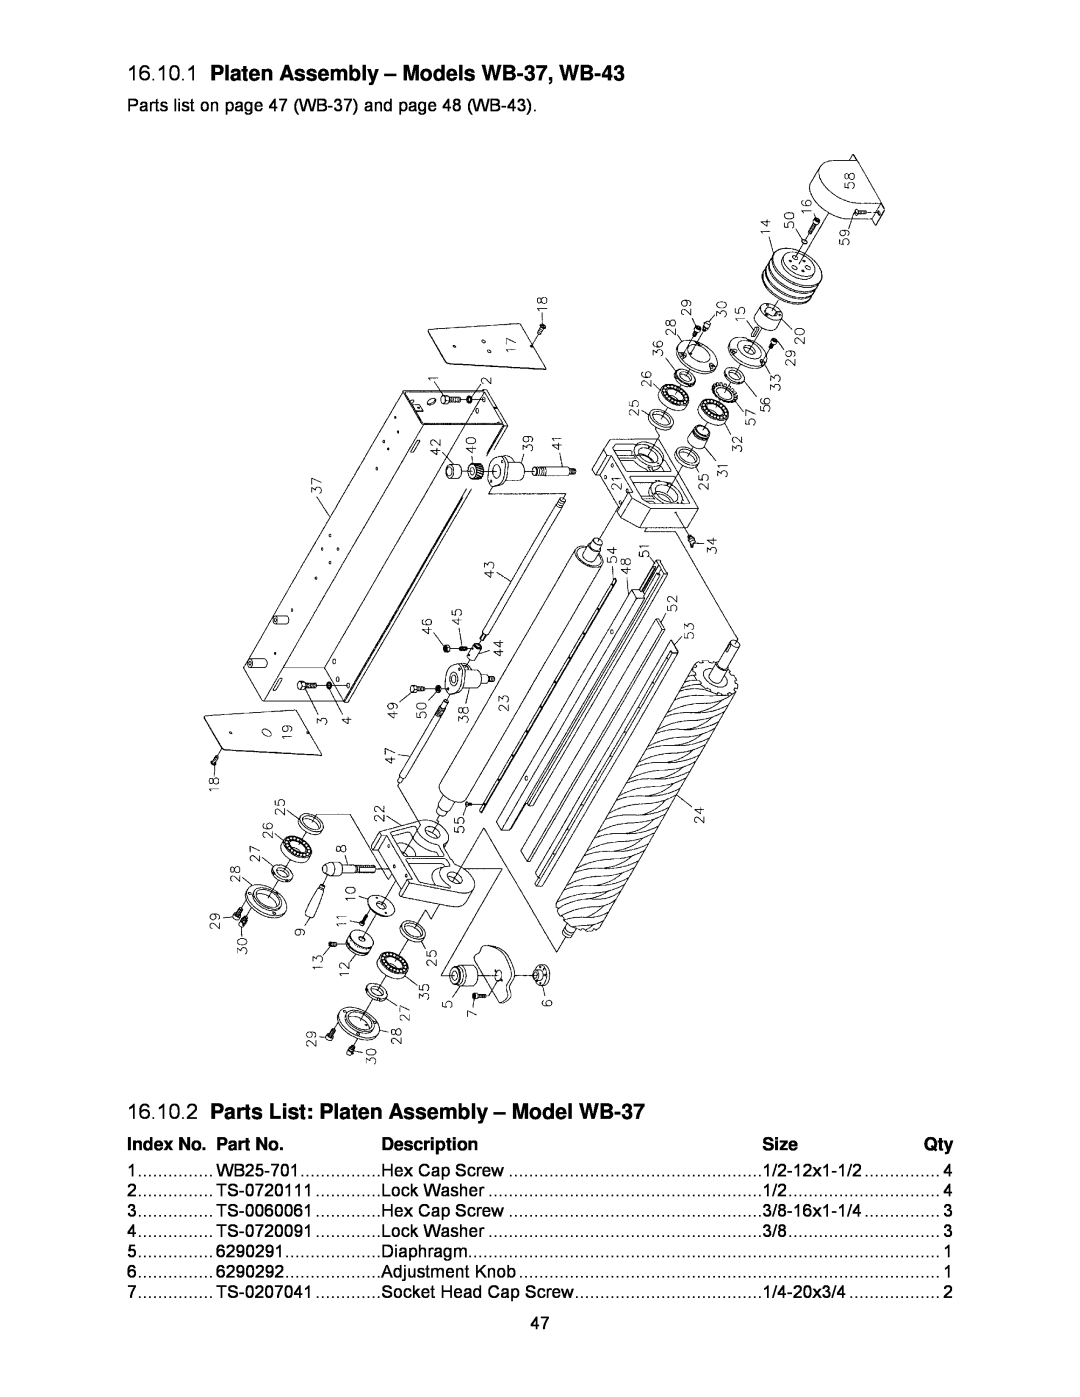 Powermatic Platen Assembly - Models WB-37, WB-43, Parts List Platen Assembly - Model WB-37, Index No. Part No, Size 